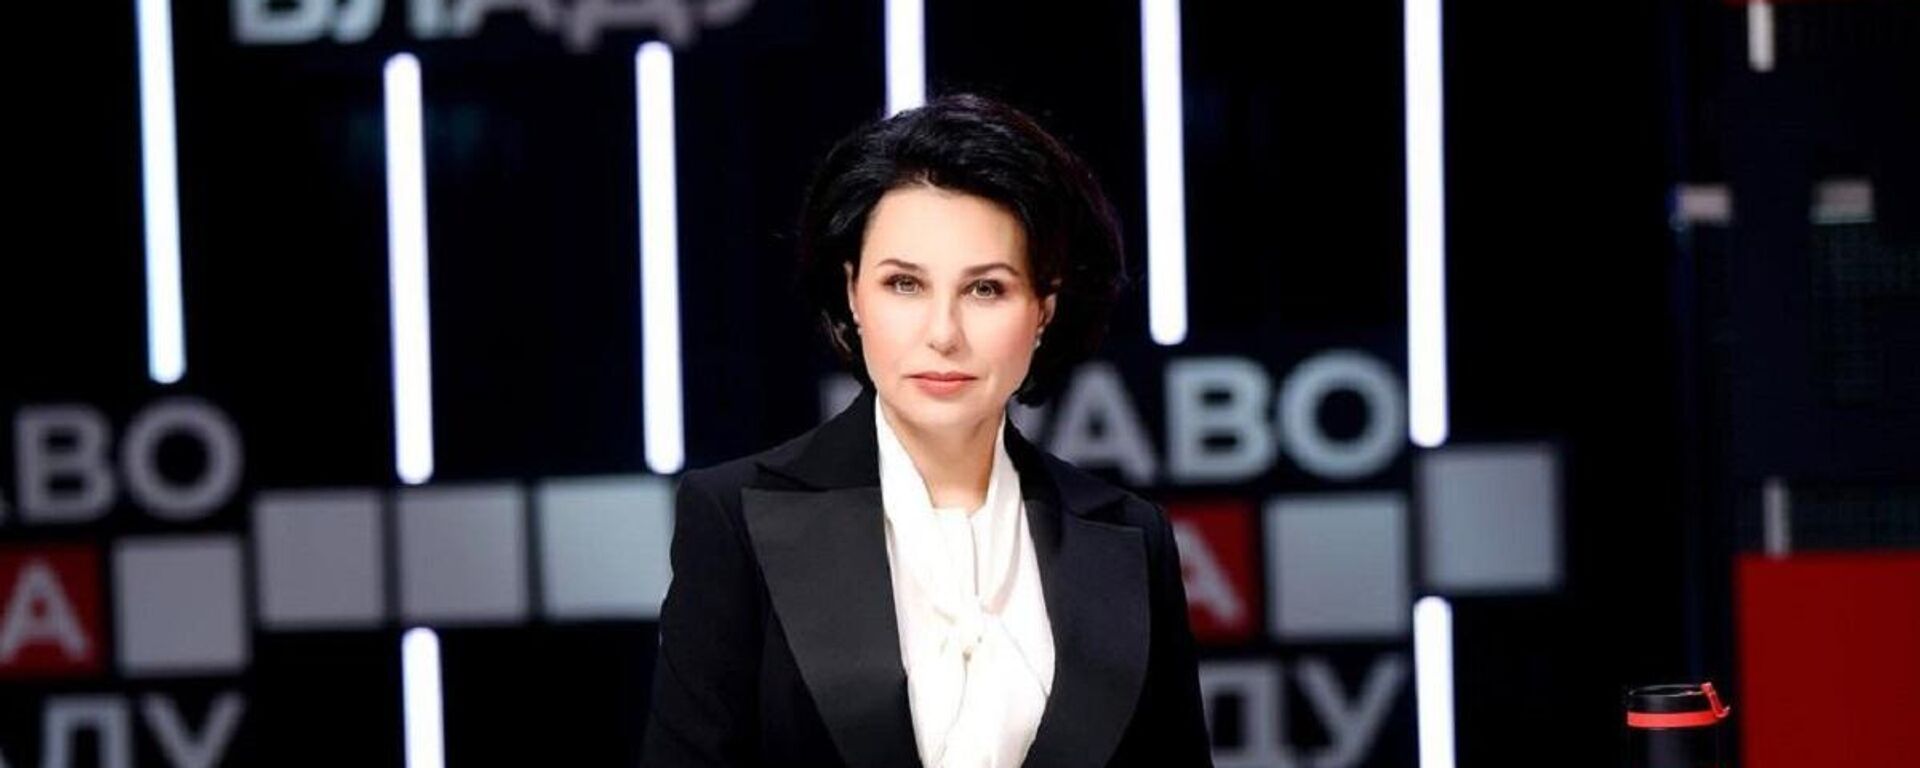 Natalia Moseichuk, presentadora ucraniana - Sputnik Mundo, 1920, 22.03.2022